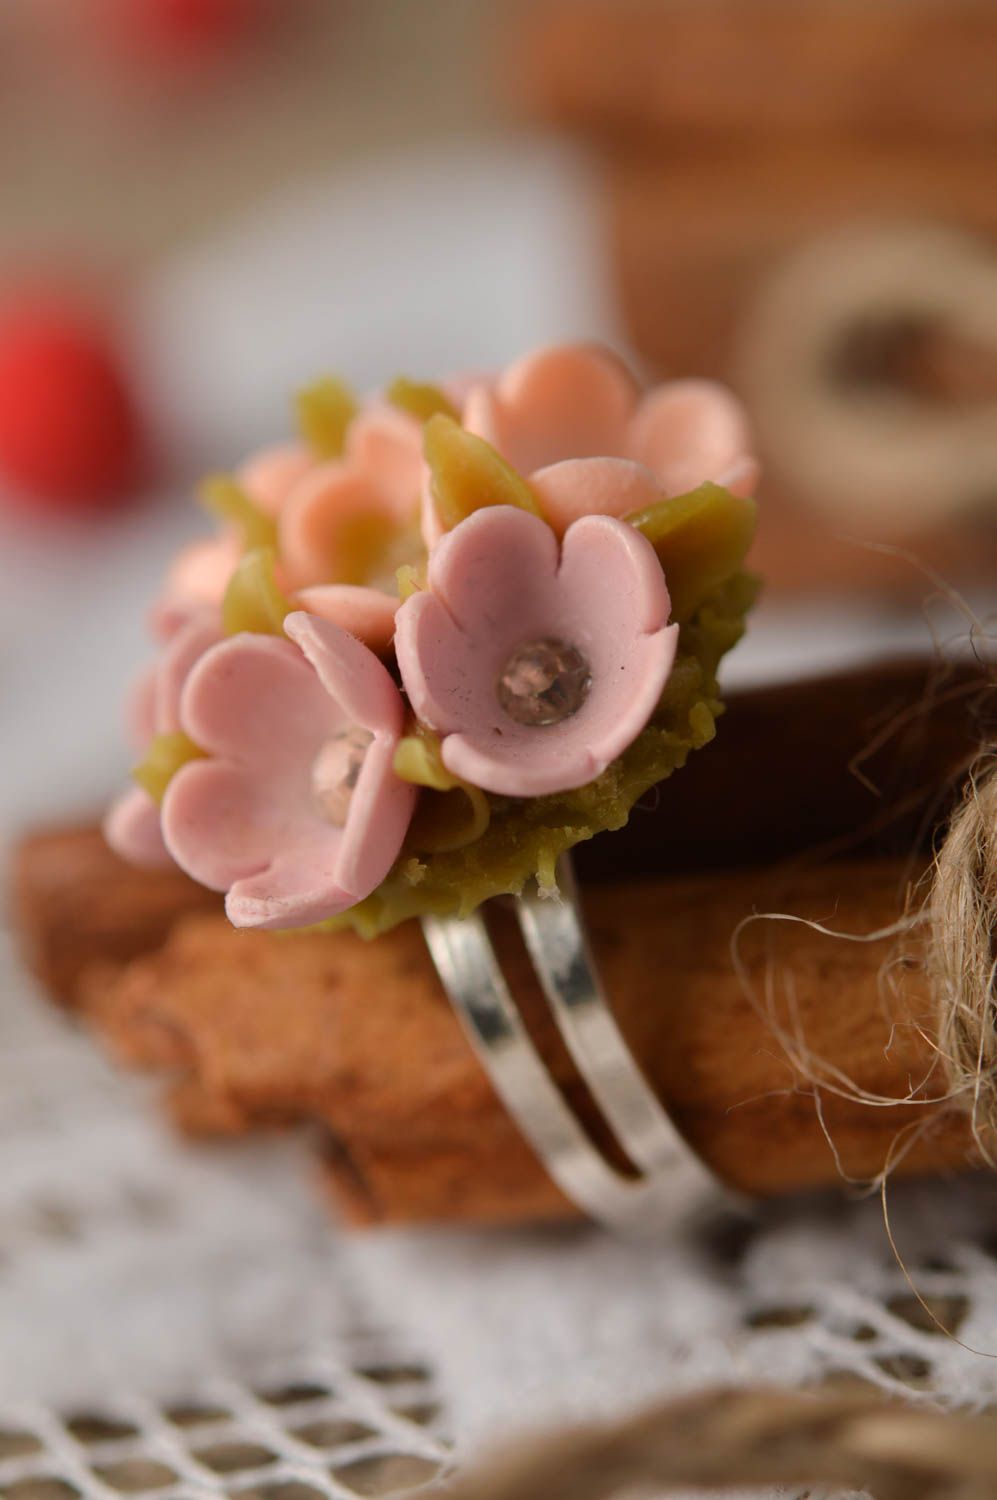 Gentle handmade flower ring artisan jewelry designs handmade gifts for her photo 2